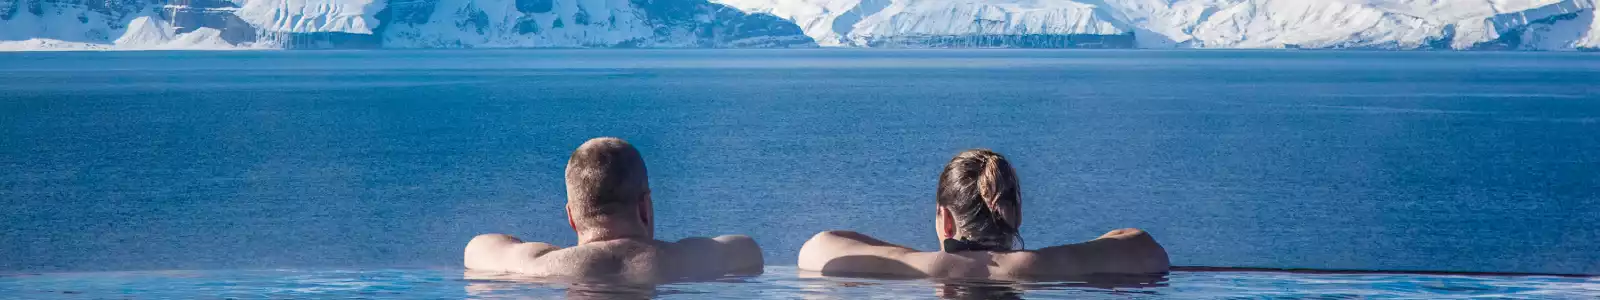 avontuur-ijsland-header